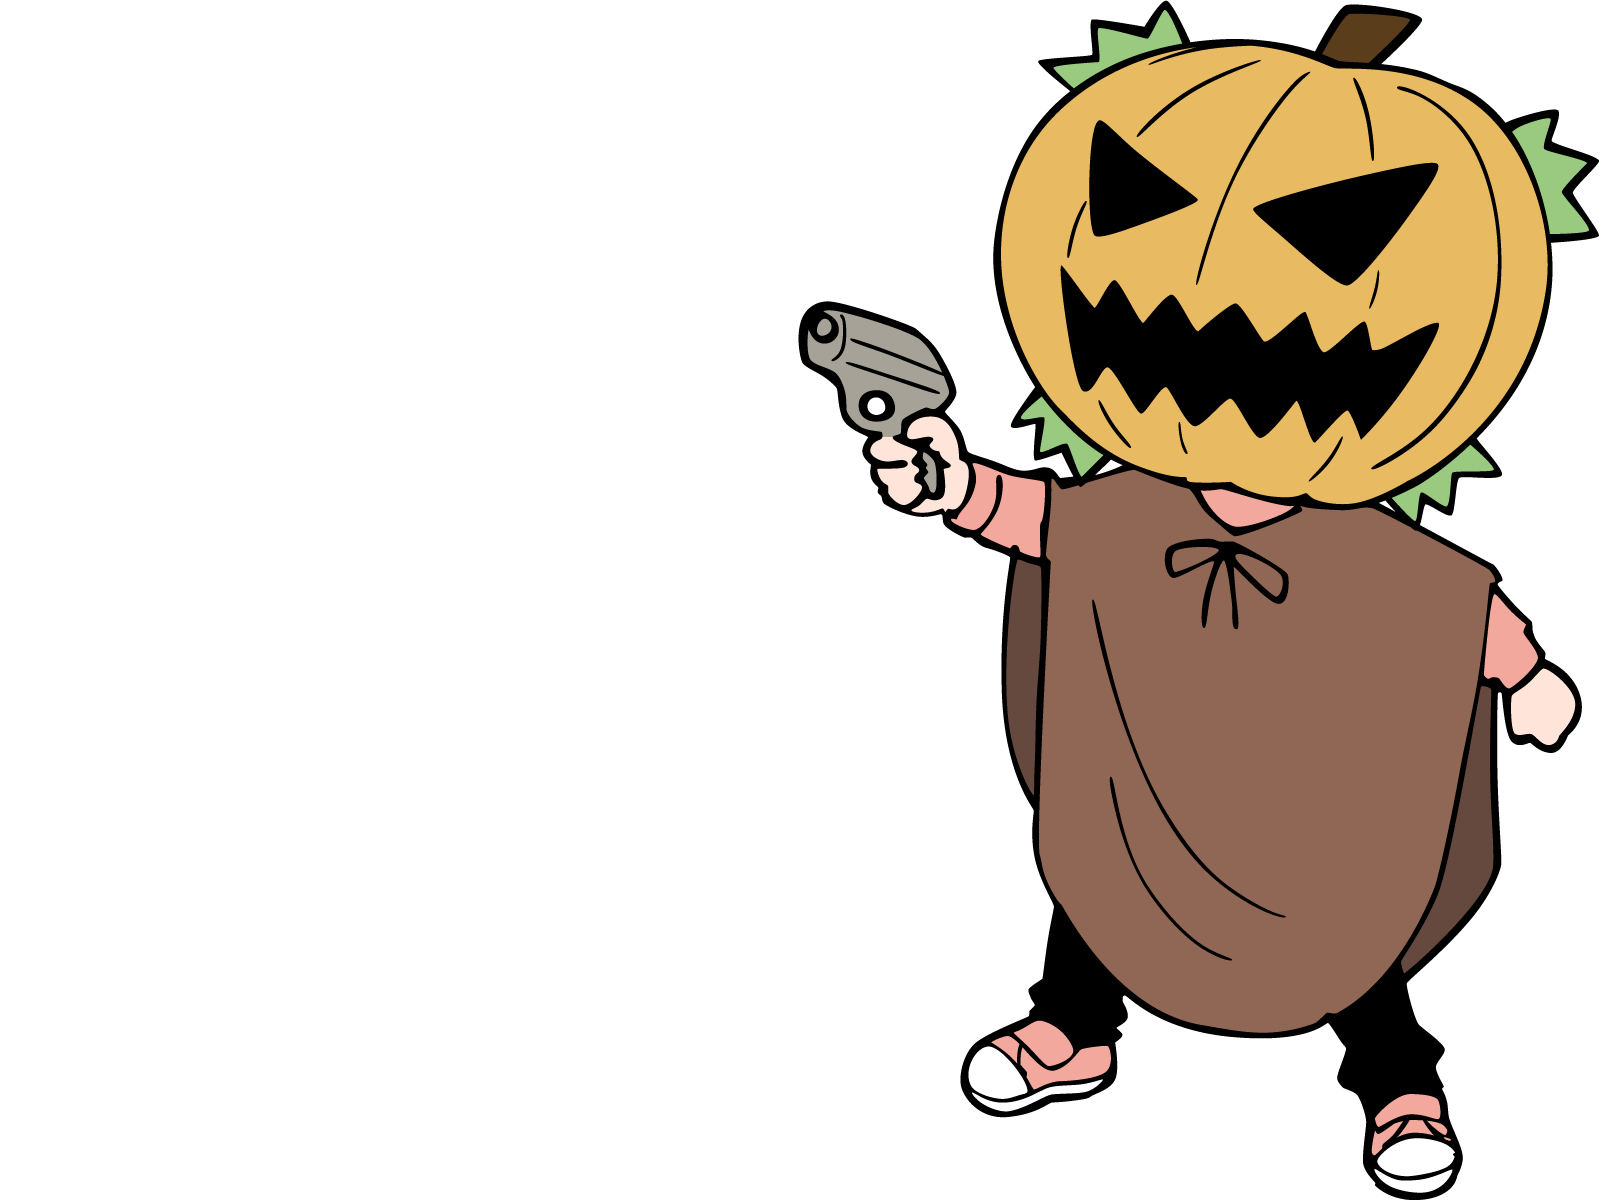 Cartoon Funny Halloween Pumpkin Head Character Stock Vector  Illustration  of october character 160738159